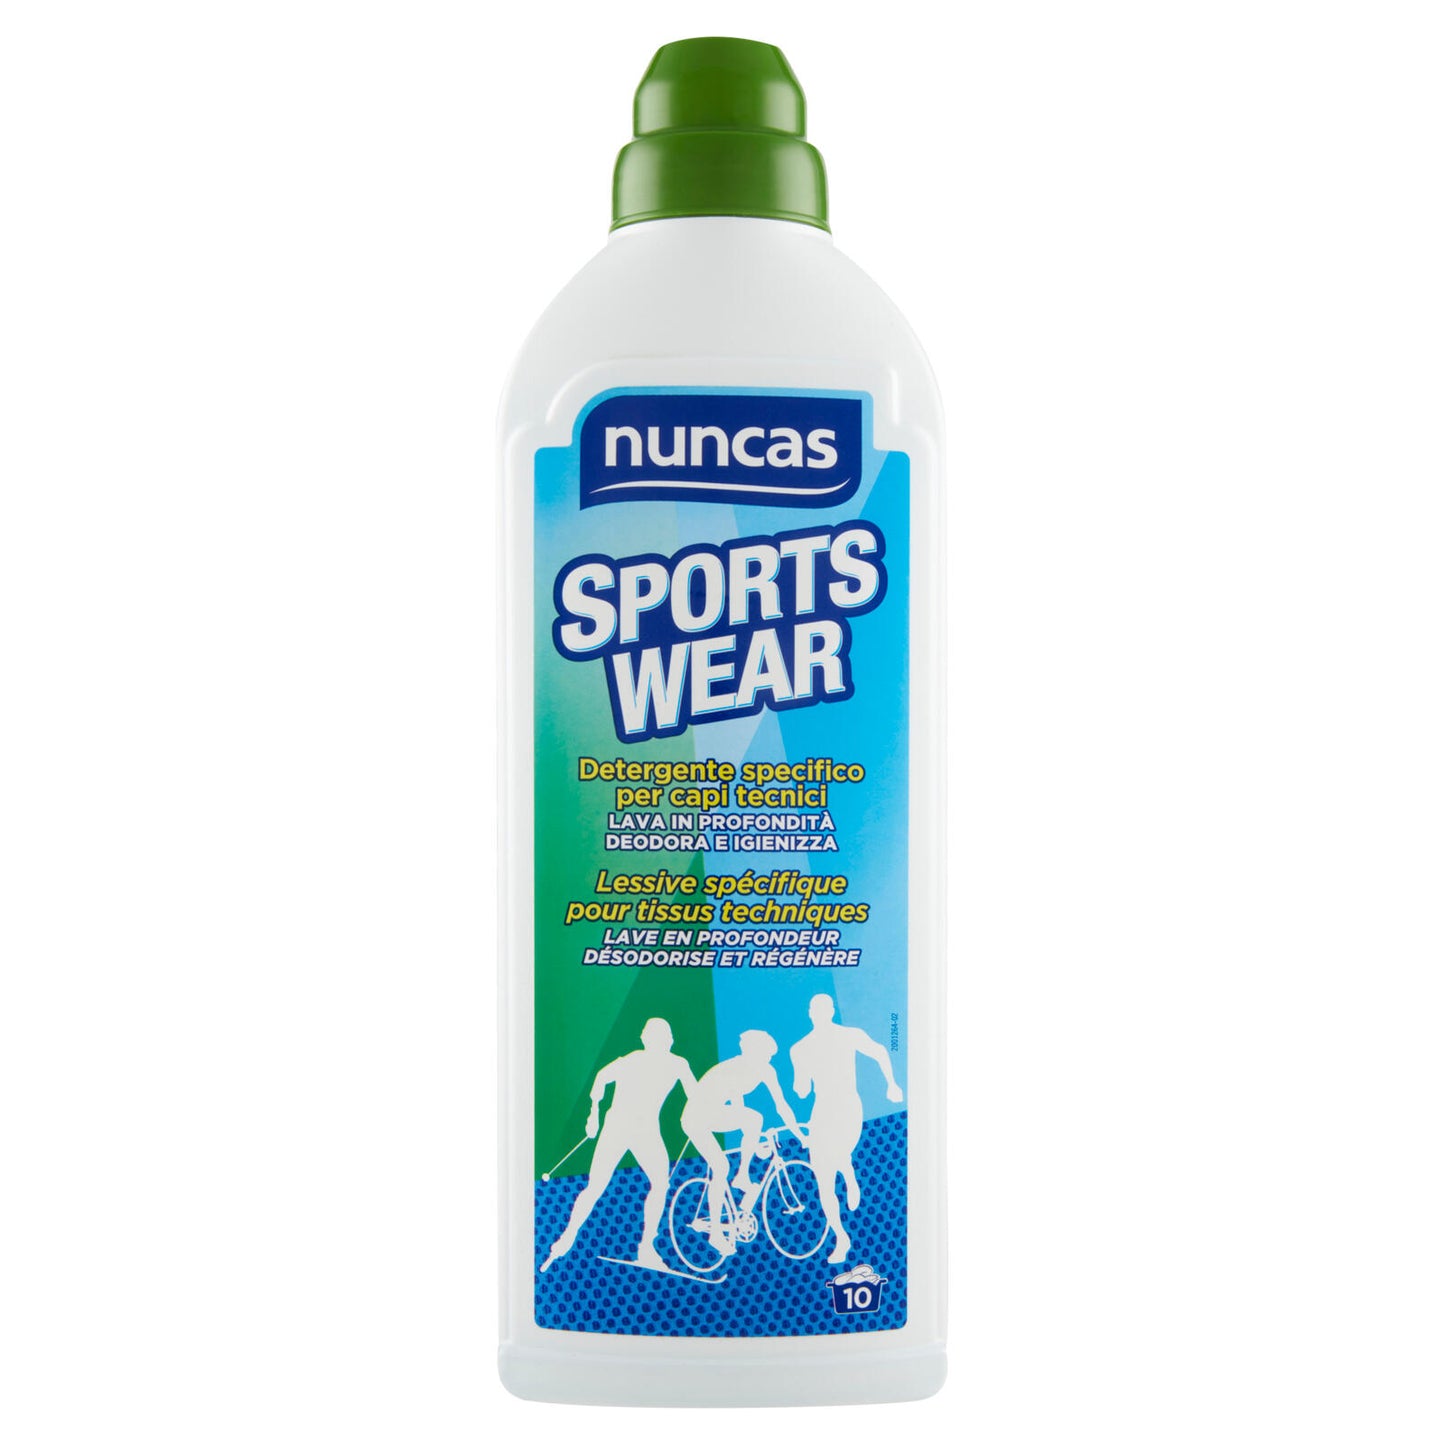 nuncas Sportswear Detergente specifico per capi tecnici 750 ml